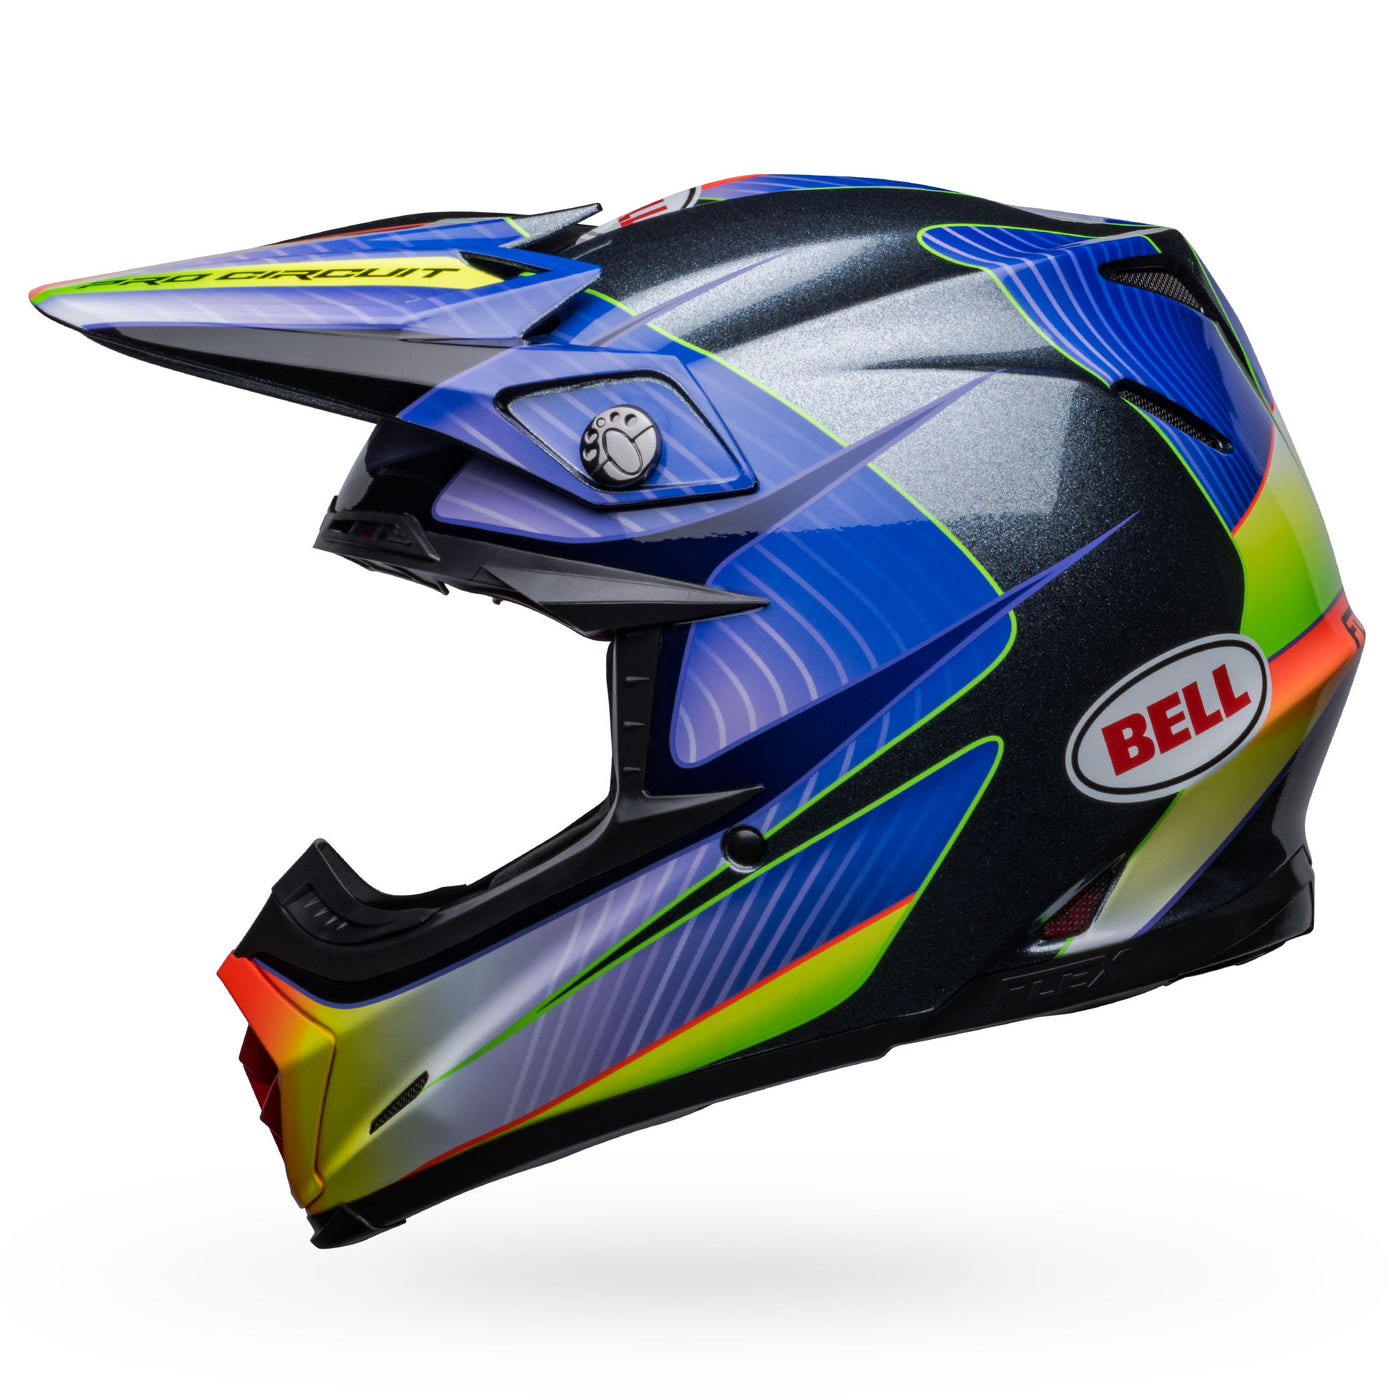 bell moto 9s flex dirt motorcycle helmet pro circuit 23 gloss silver metallic flake left